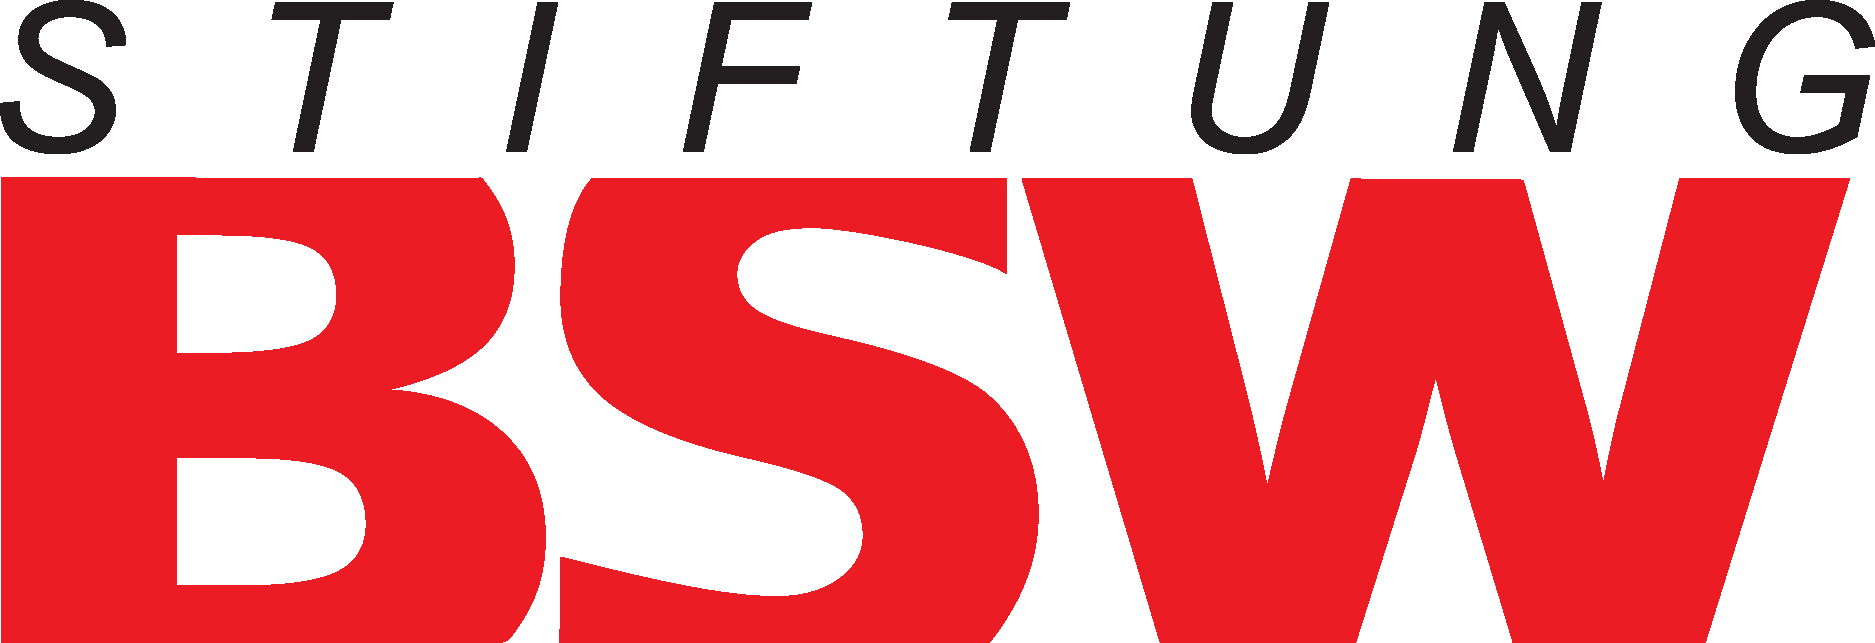 BSF - Bars & Stripes Fitness Logo - Full Color (White Text)! - Fitness Gym  - Sticker | TeePublic